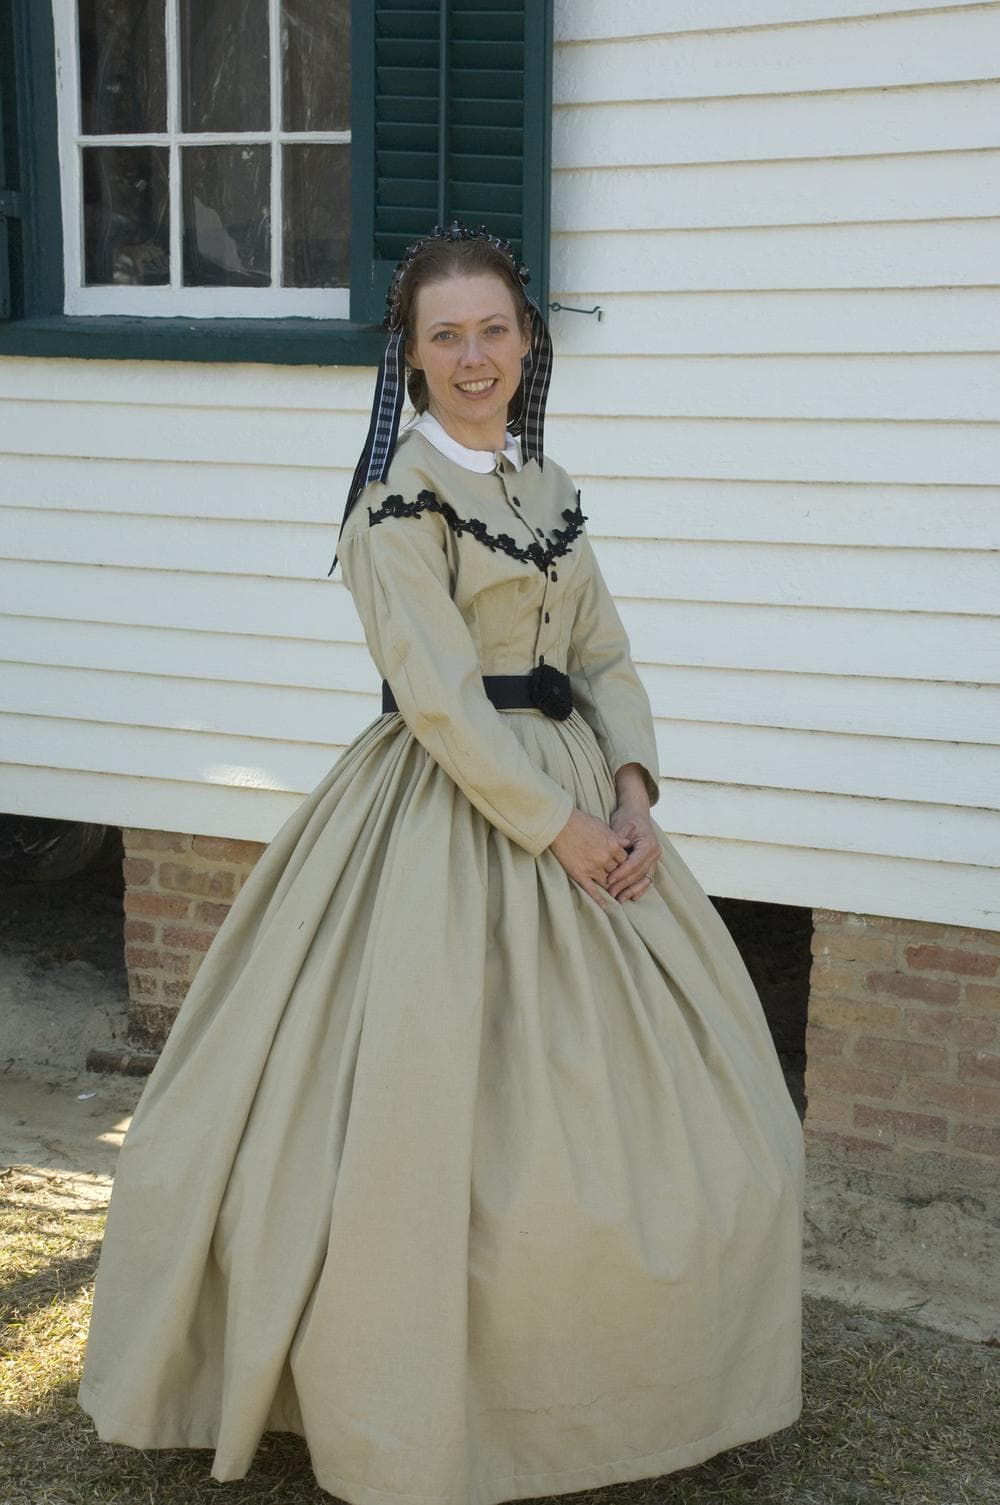 North Carolina state historian Lerae Umfleet, who tweets and writes about the Civil War, and occasionally wears period dress. (Lerae Umfleet)